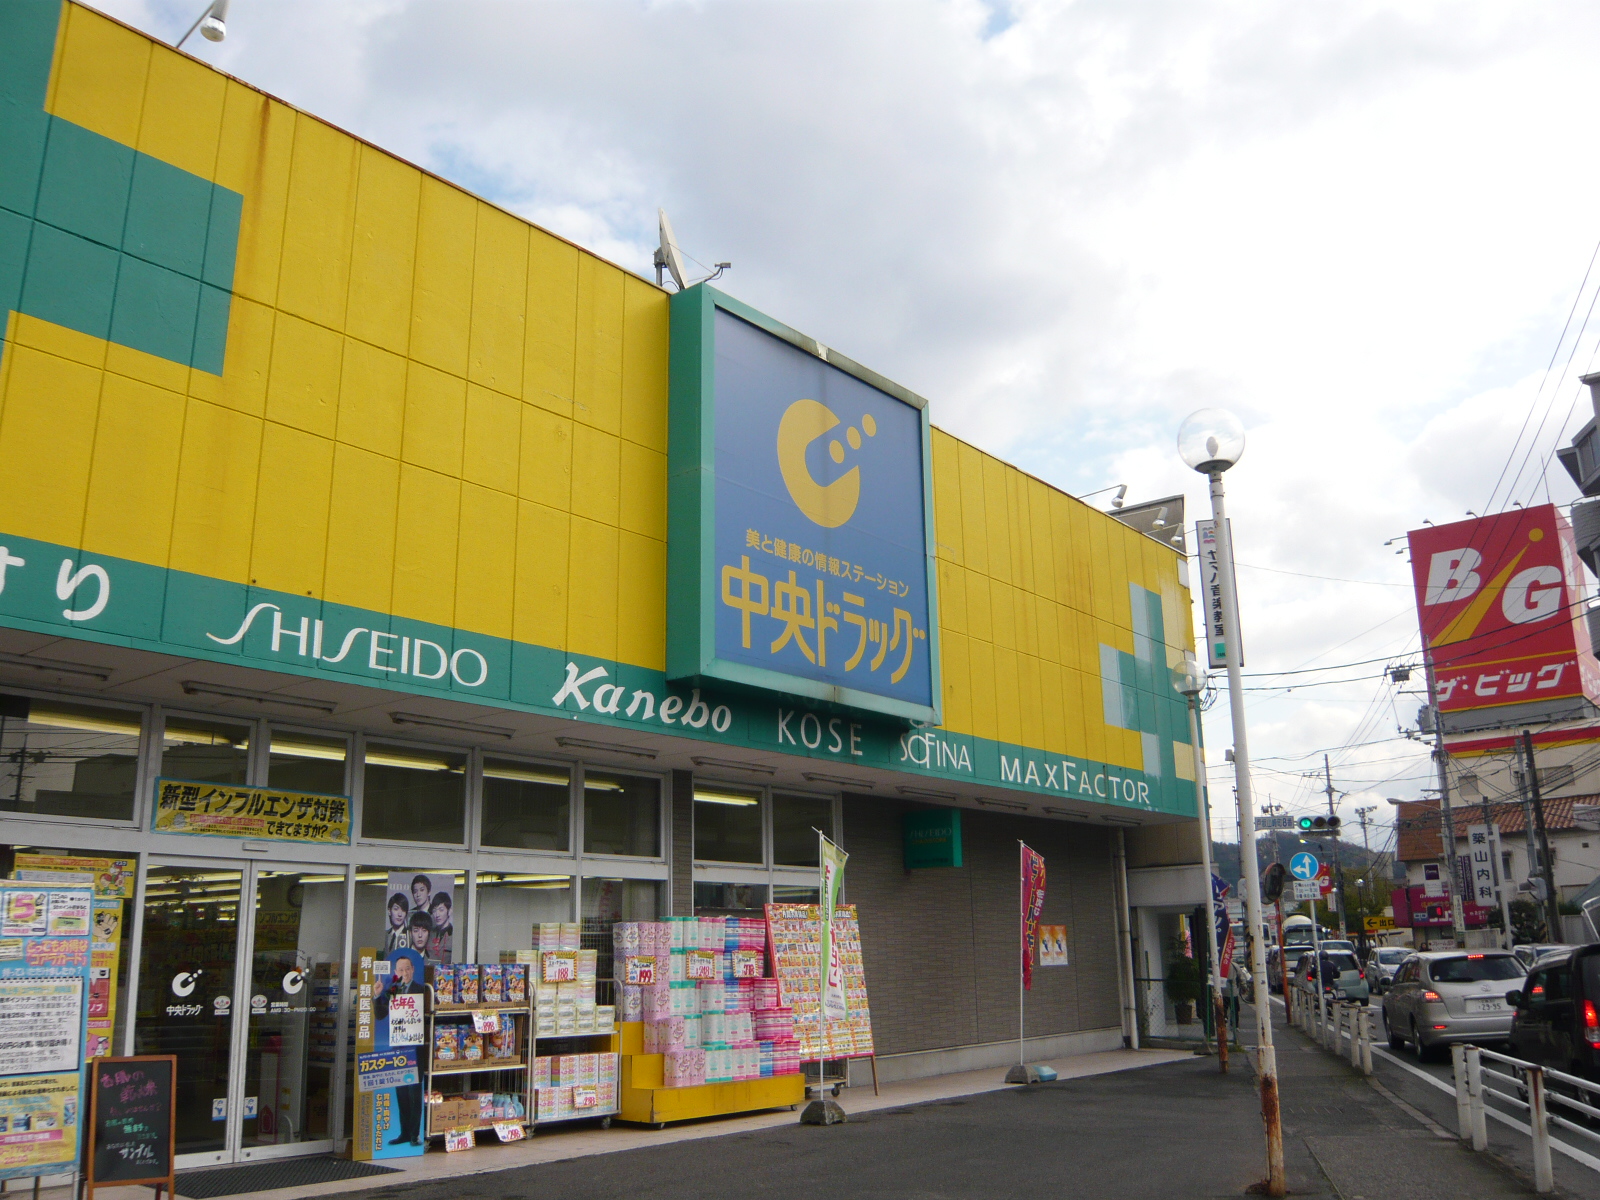 Dorakkusutoa. 150m to Hiroshima central pharmacy Tosaka store (drugstore)